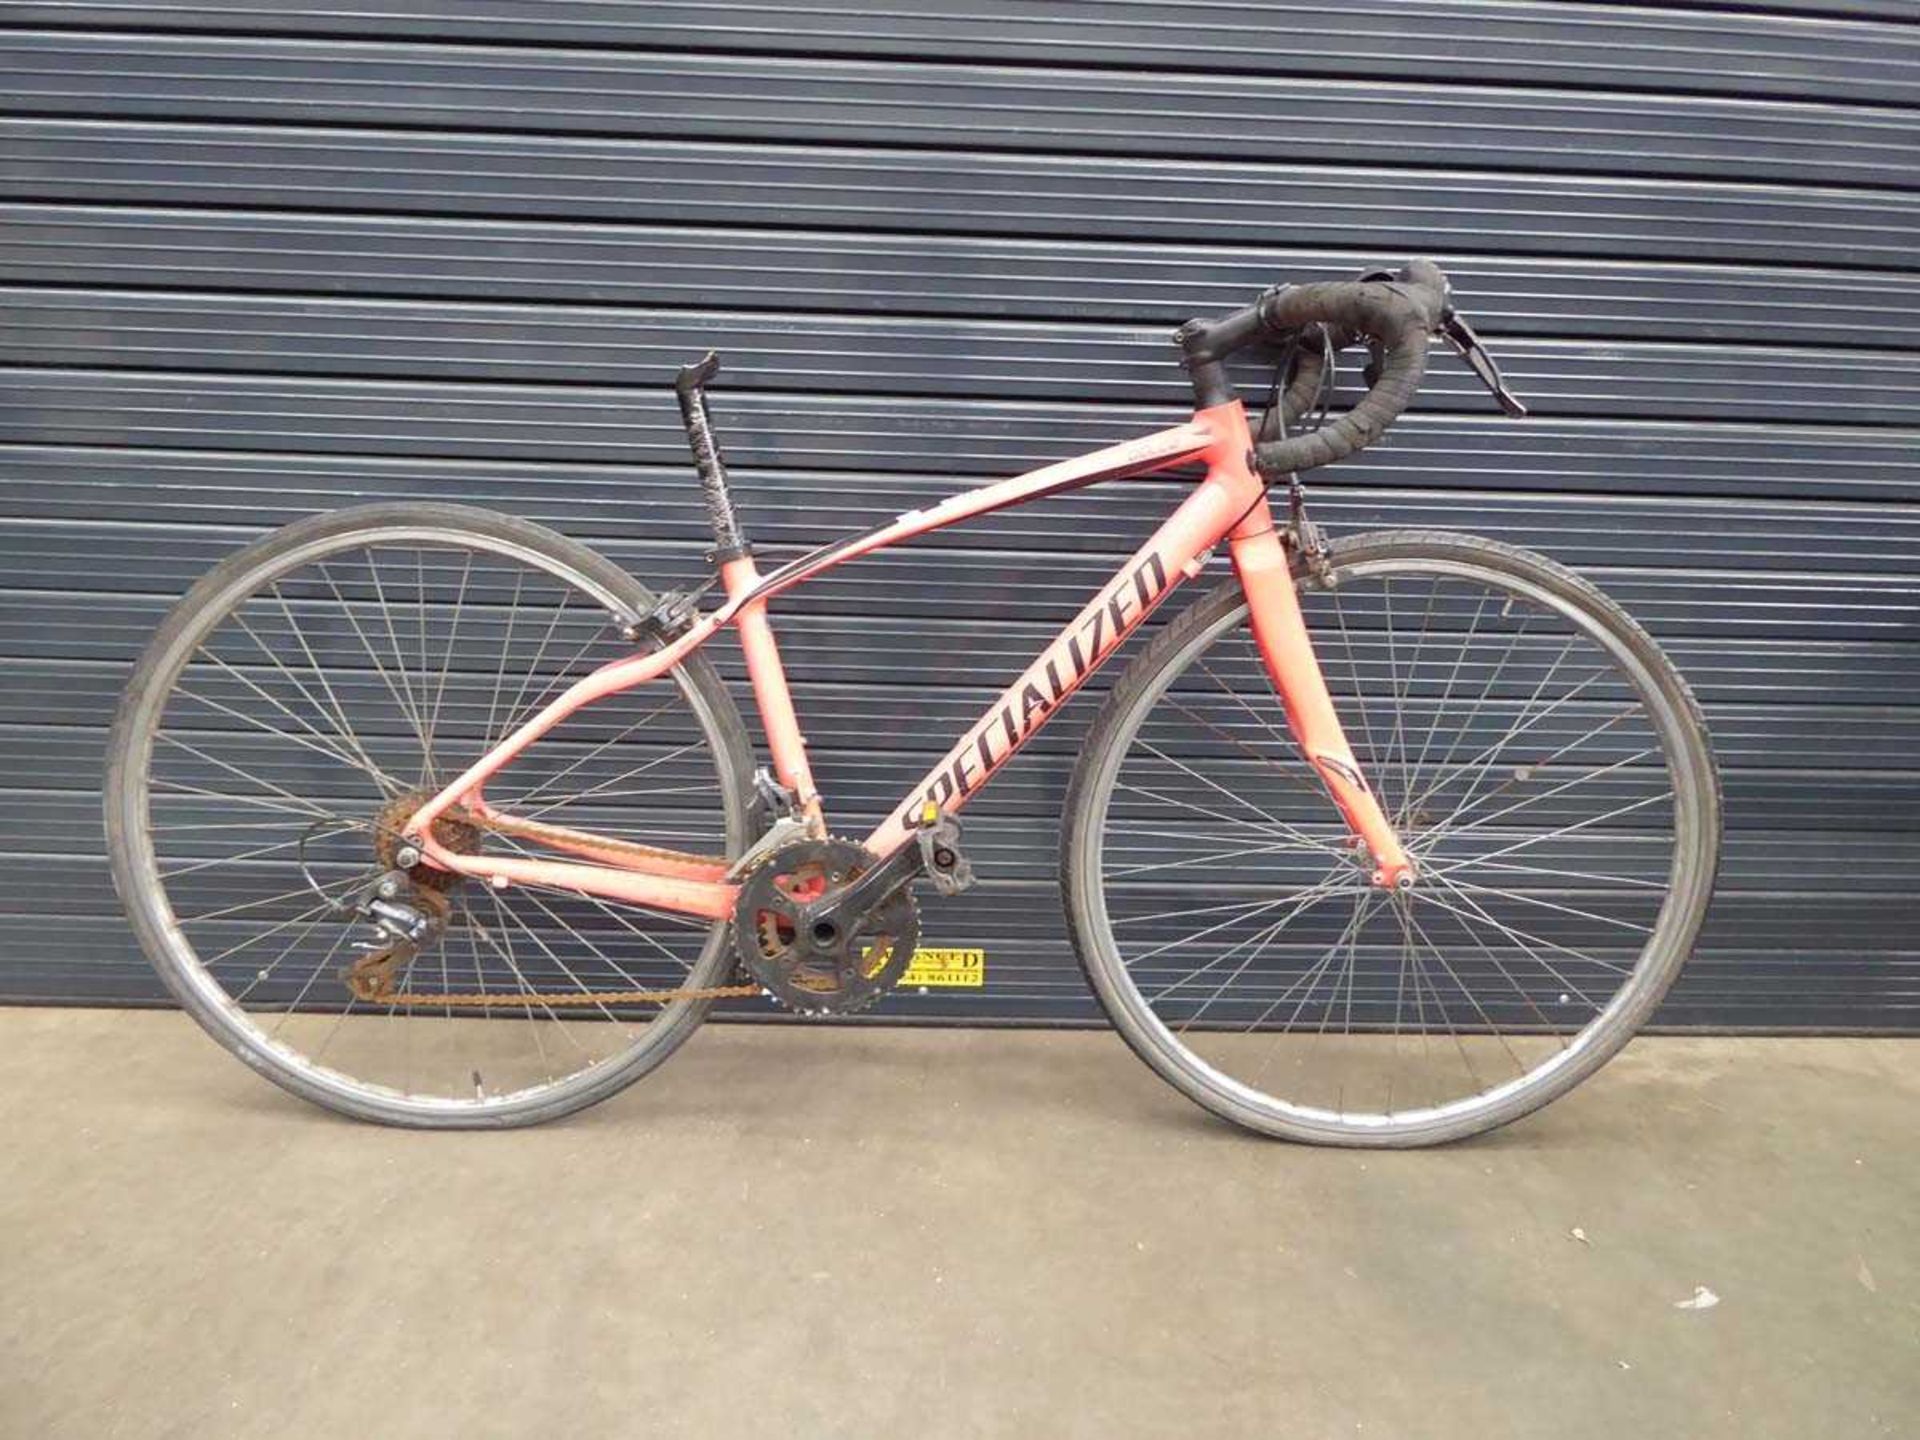 Pink Specialised racing bike, no seat